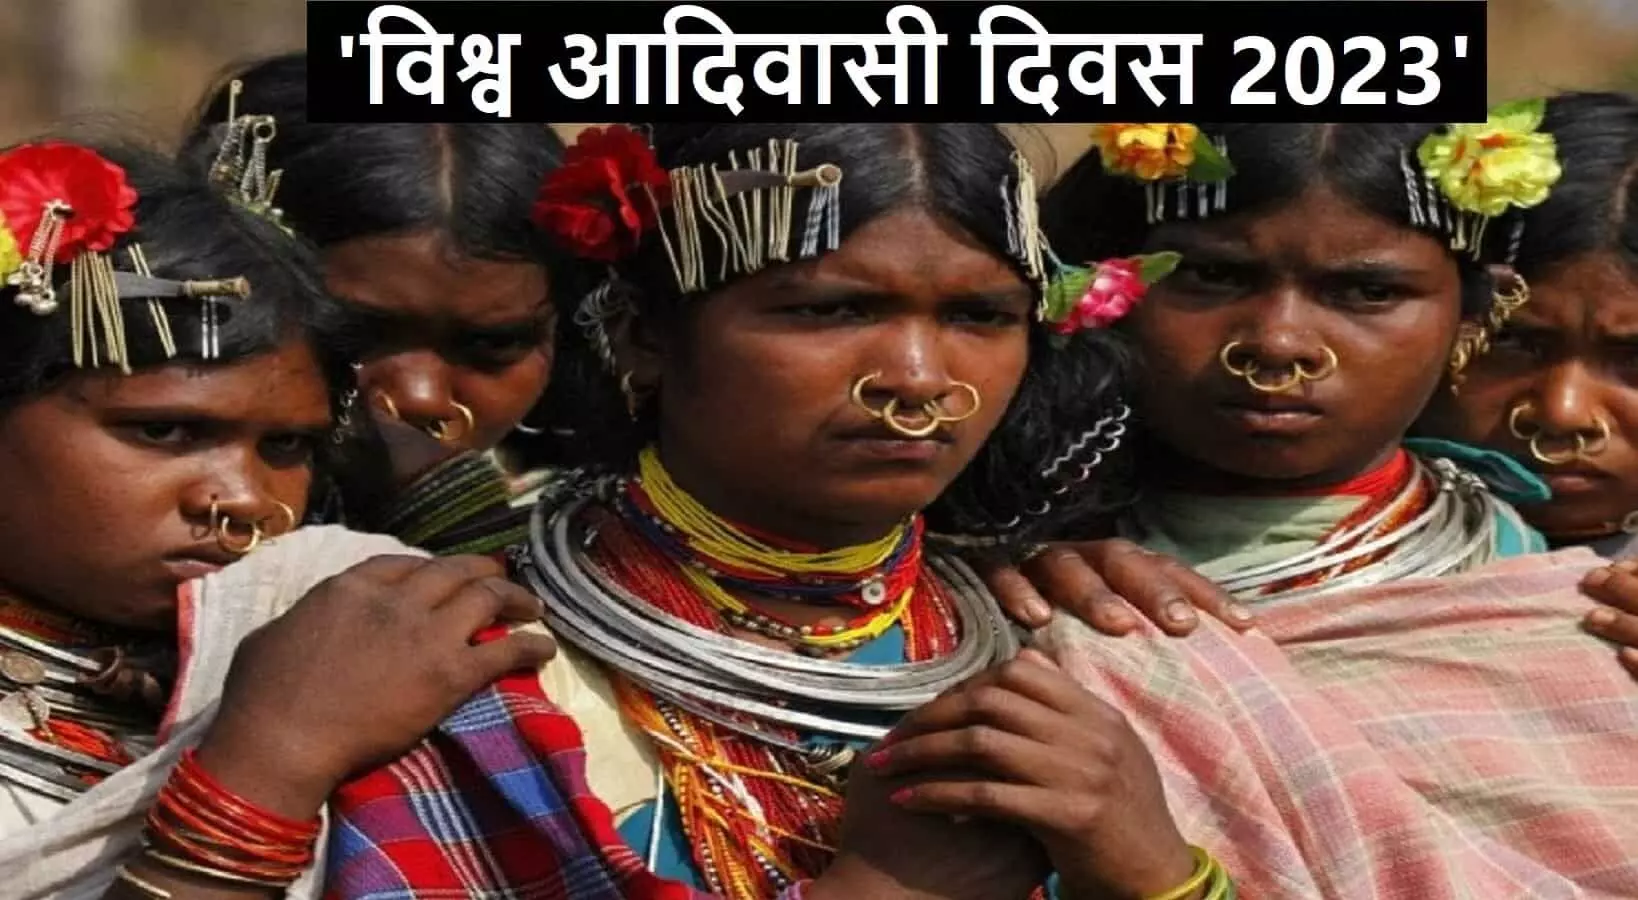 Vishwa Adivasi Diwas 2023